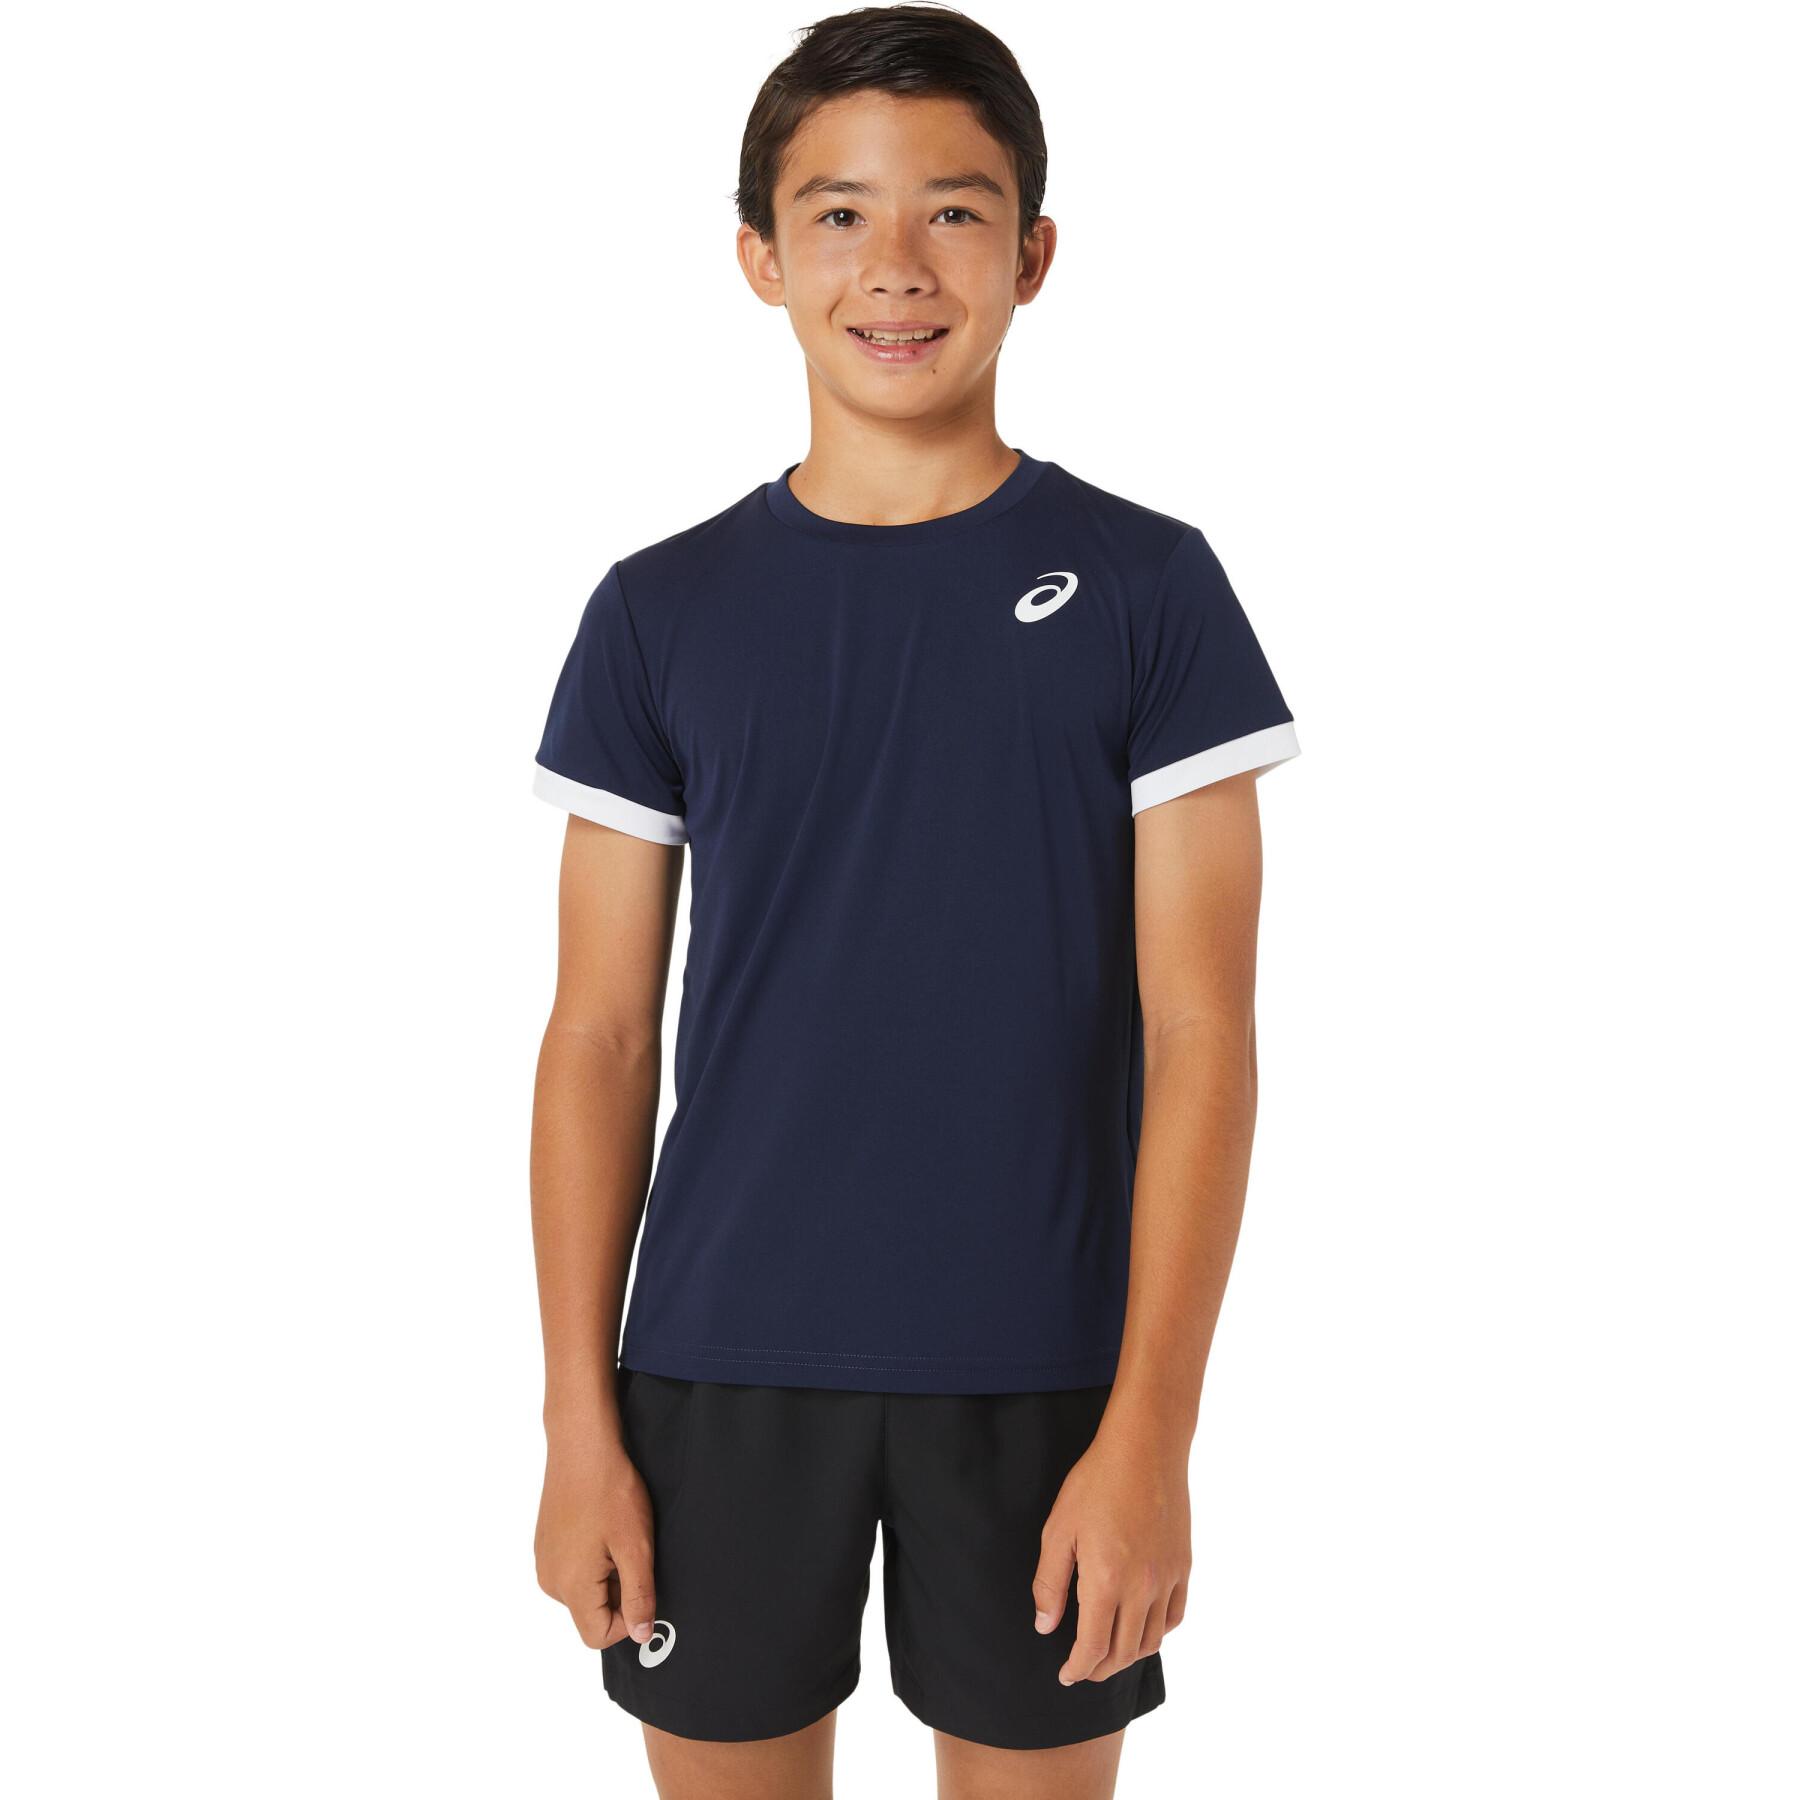 Child tennis shirt Asics